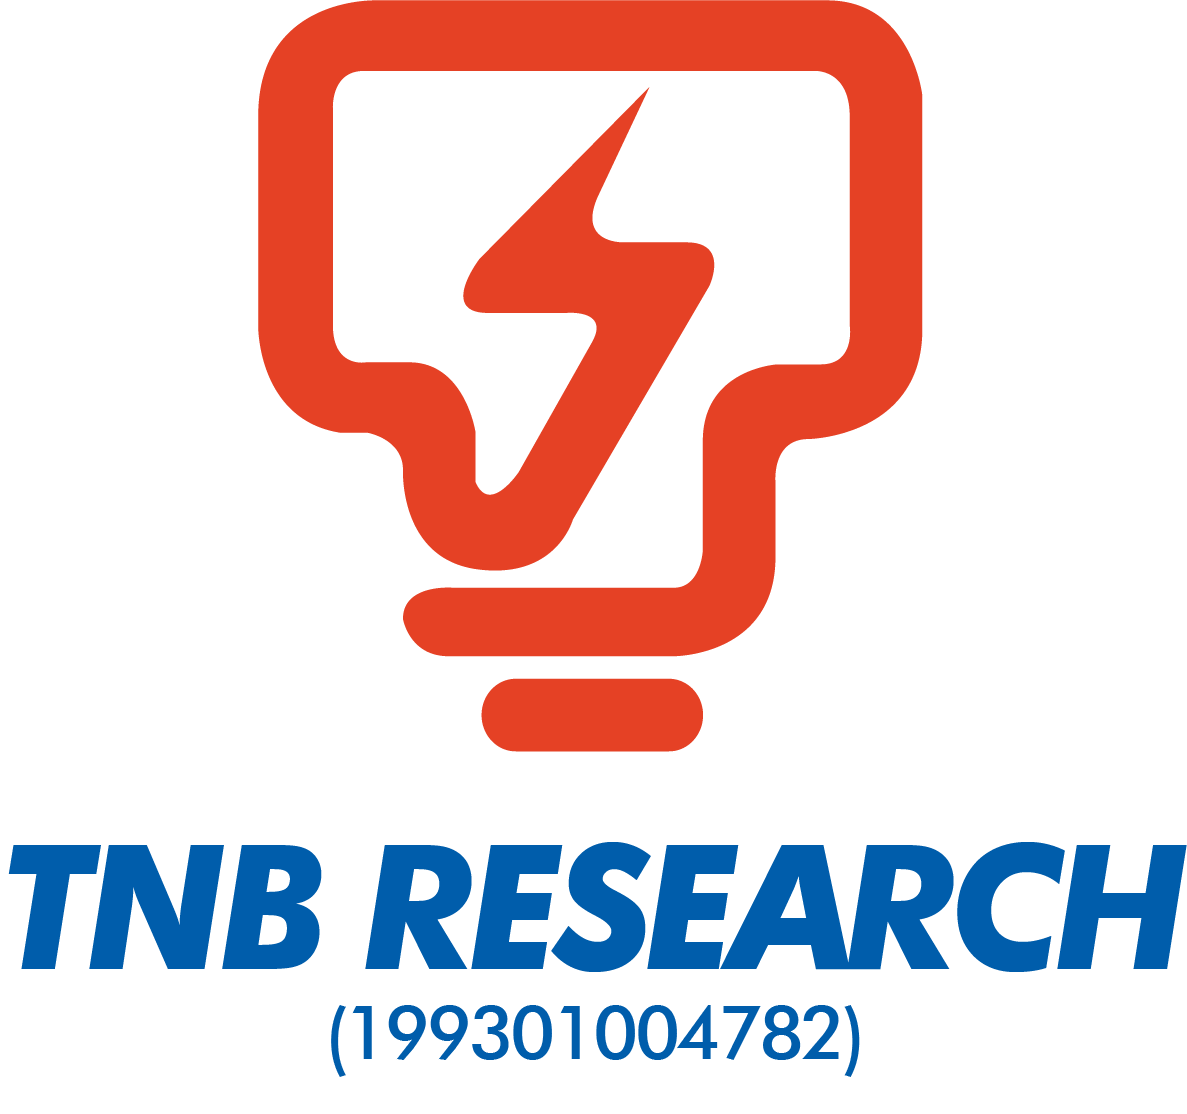 TNB Research